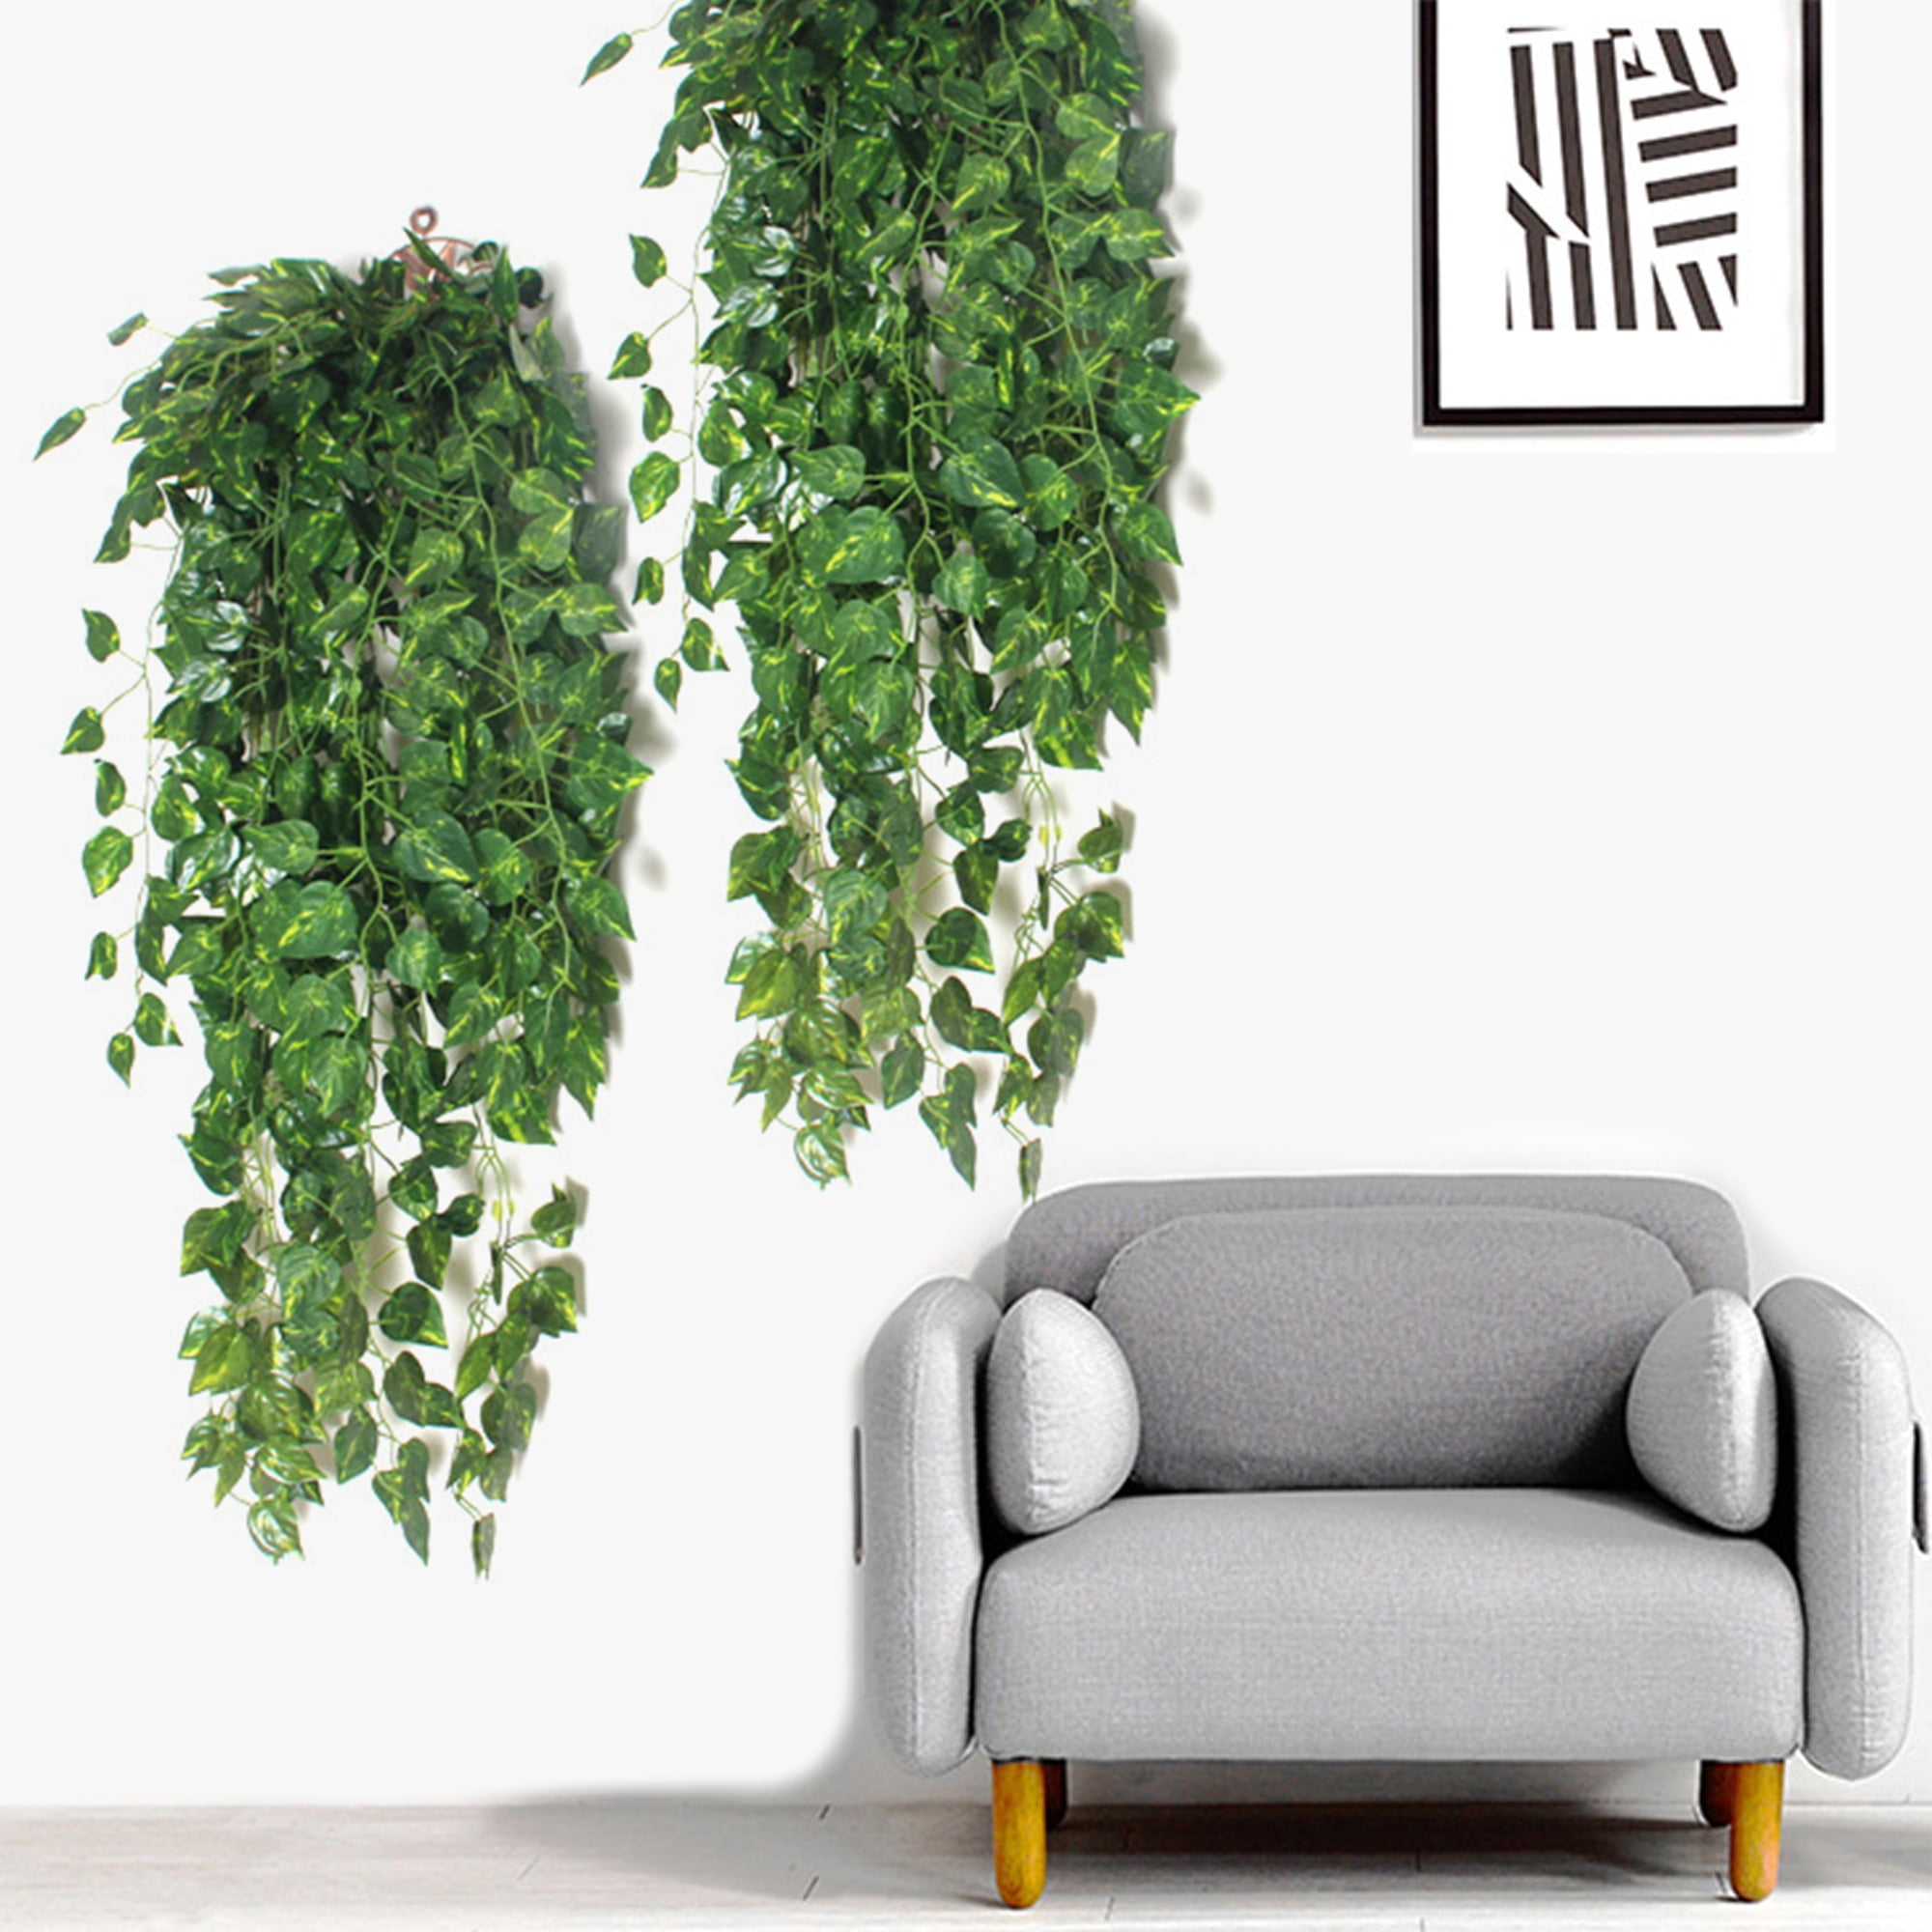 HOGADO 2pcs Artificial Ivy Fake Hanging Vine Plants Decor Plastic Greenery  for Home Wall Indoor Outdside Hanging Basket